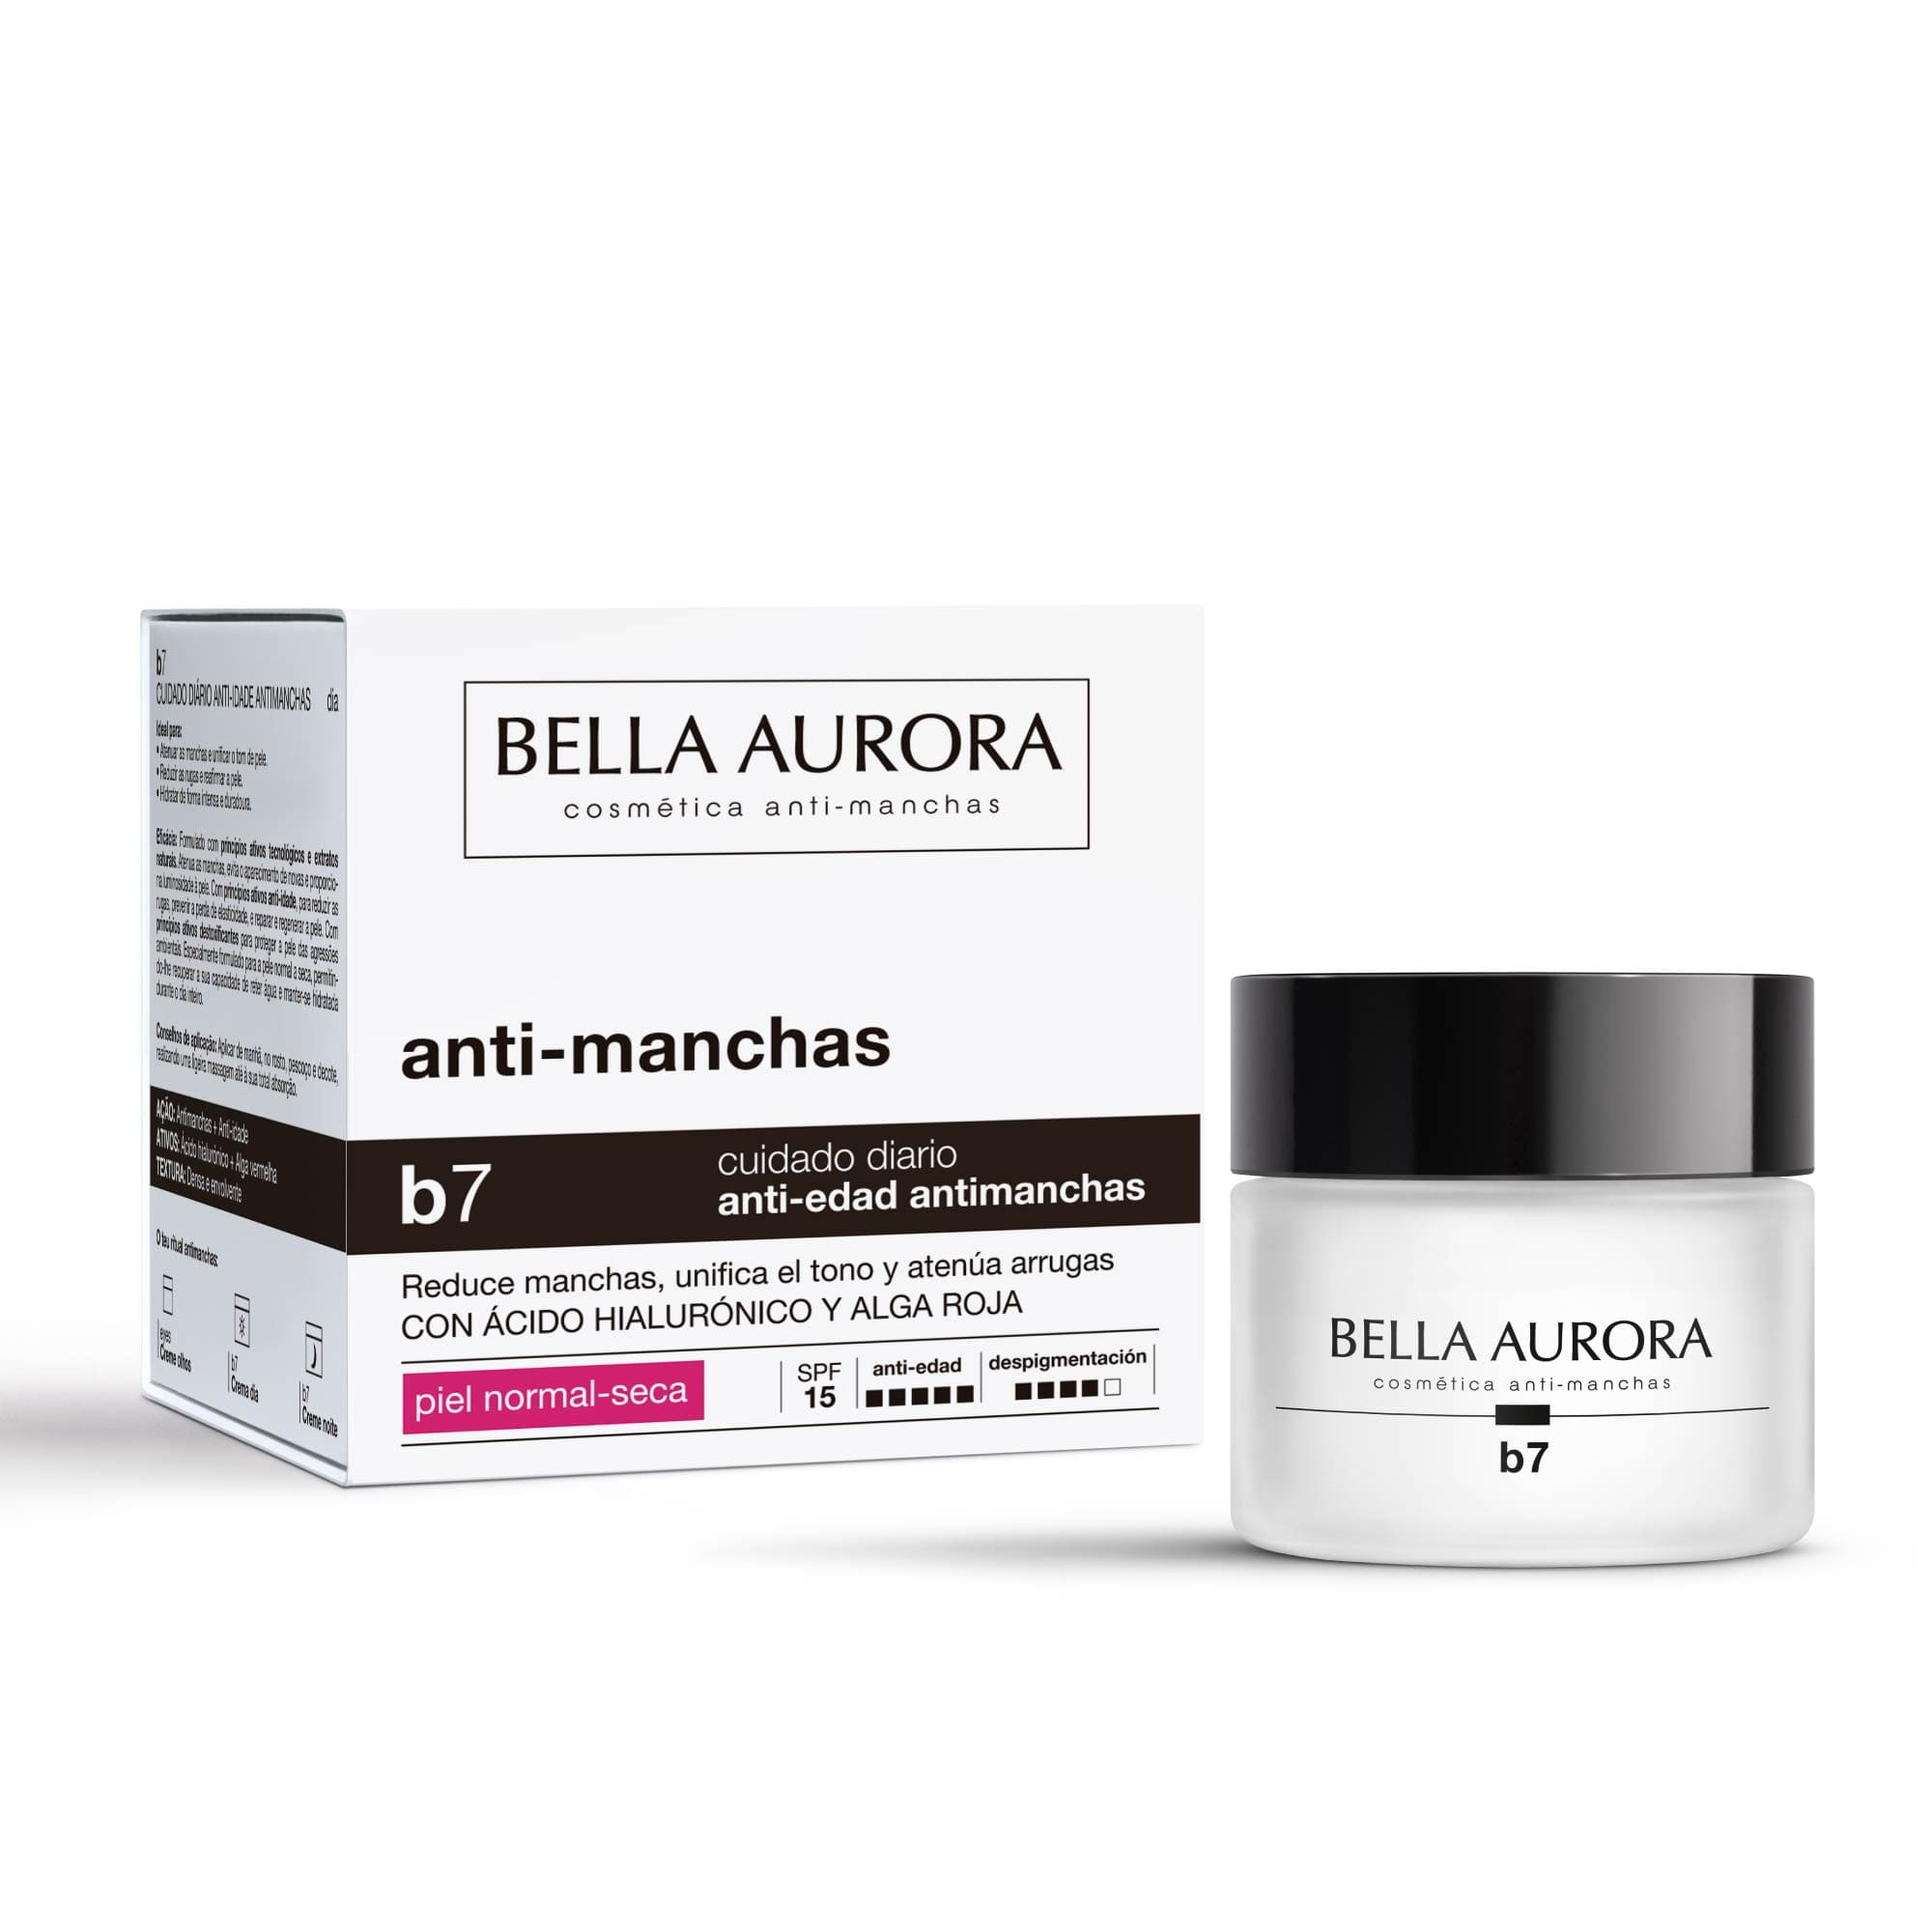 Bella Aurora Bio10 Anti-Manchas Pieles Normales-Secas 30ml